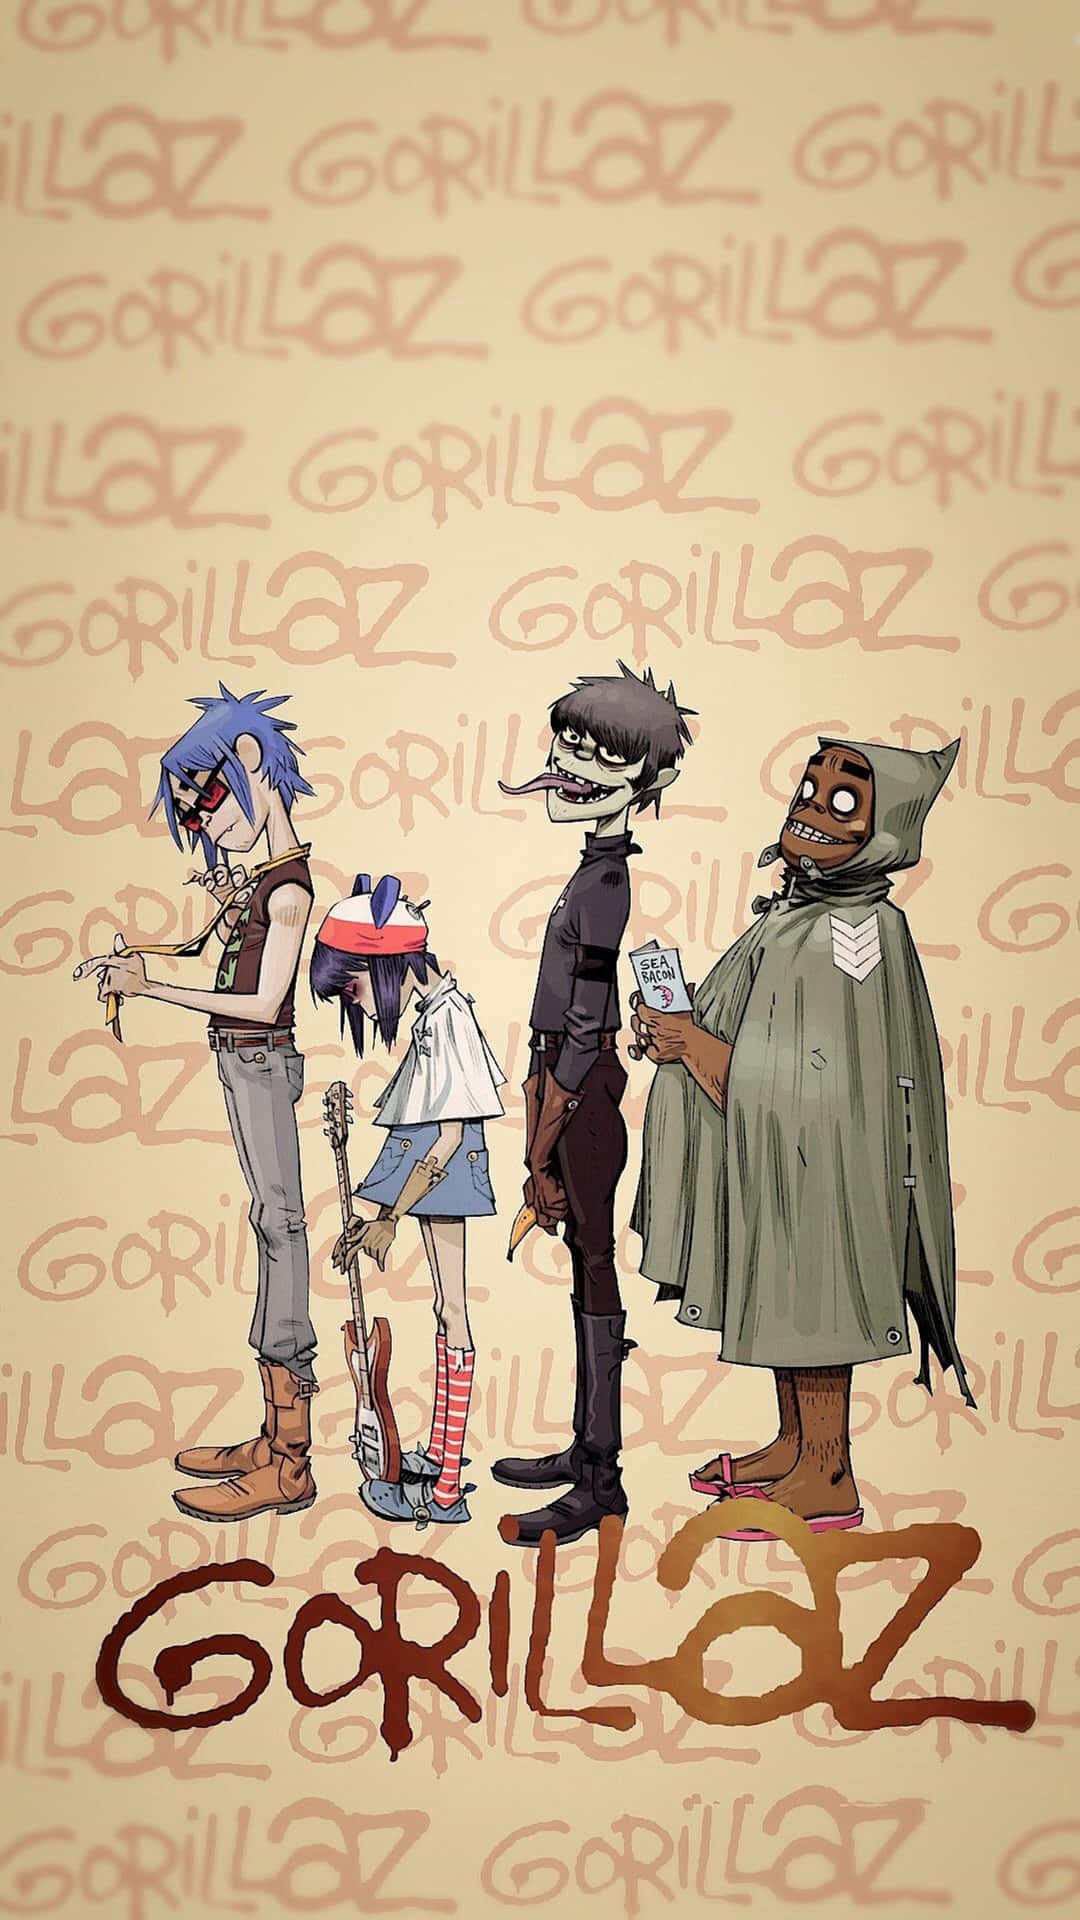 Gorillaz' Virtual Band Members Cartoonized in a 4K Desktop Wallpaper Wallpaper